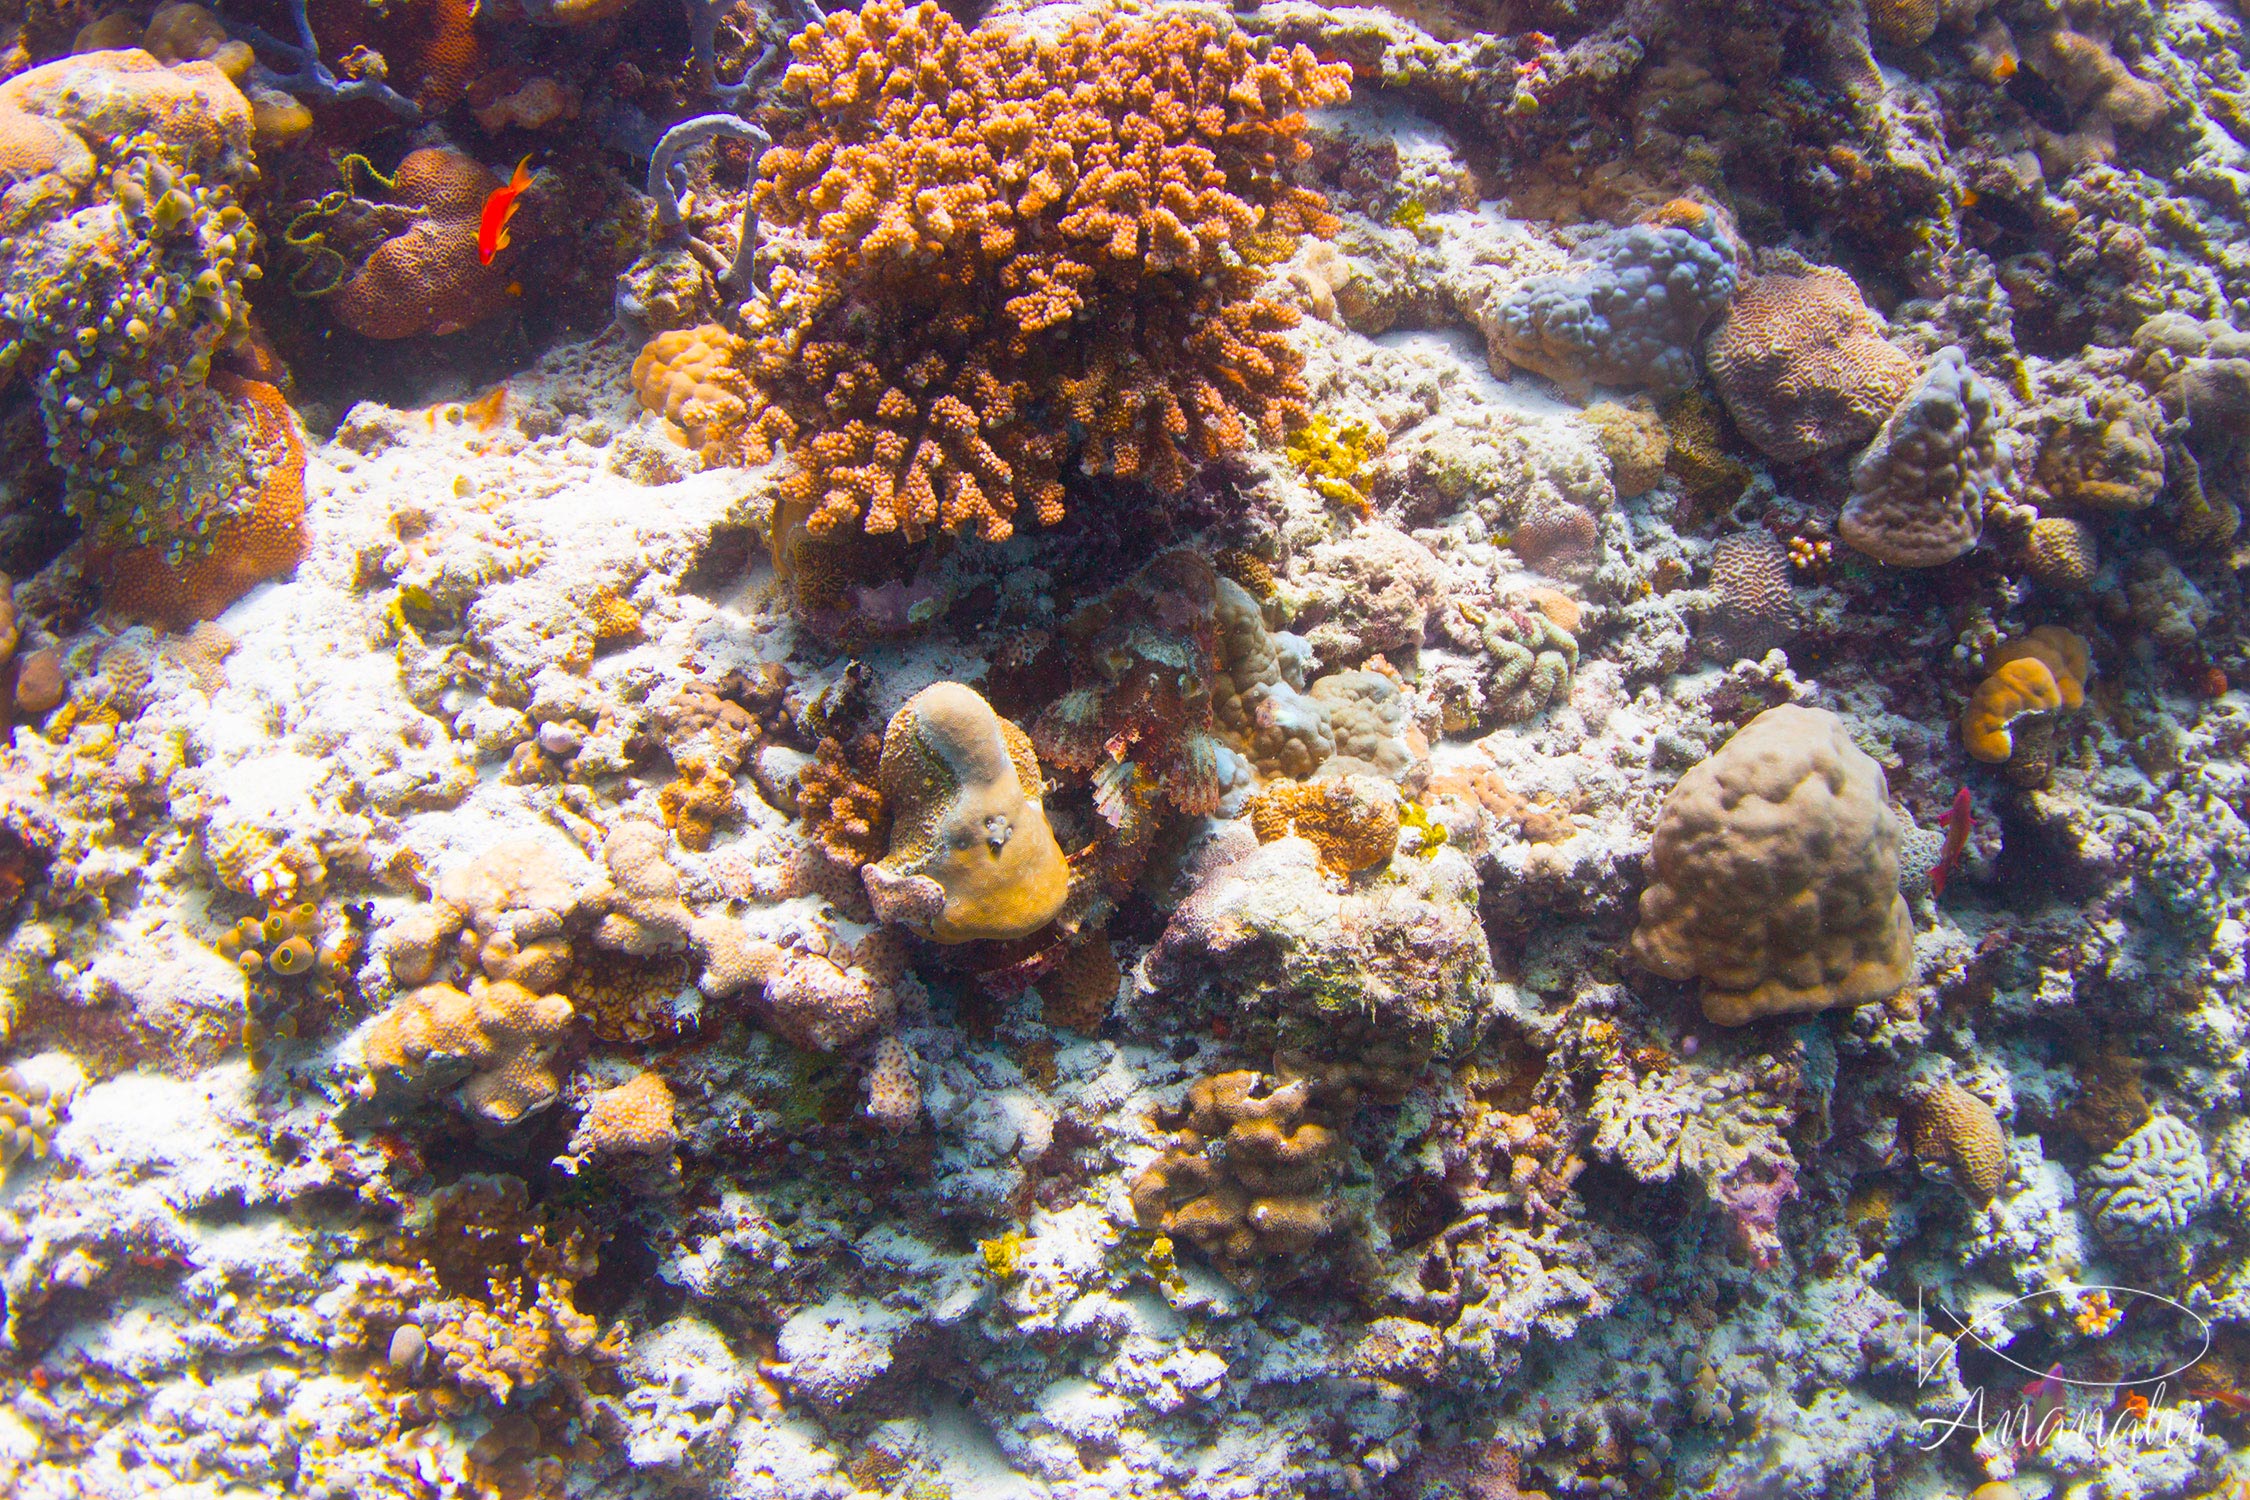 Tasseled scorpionfish of Maldives